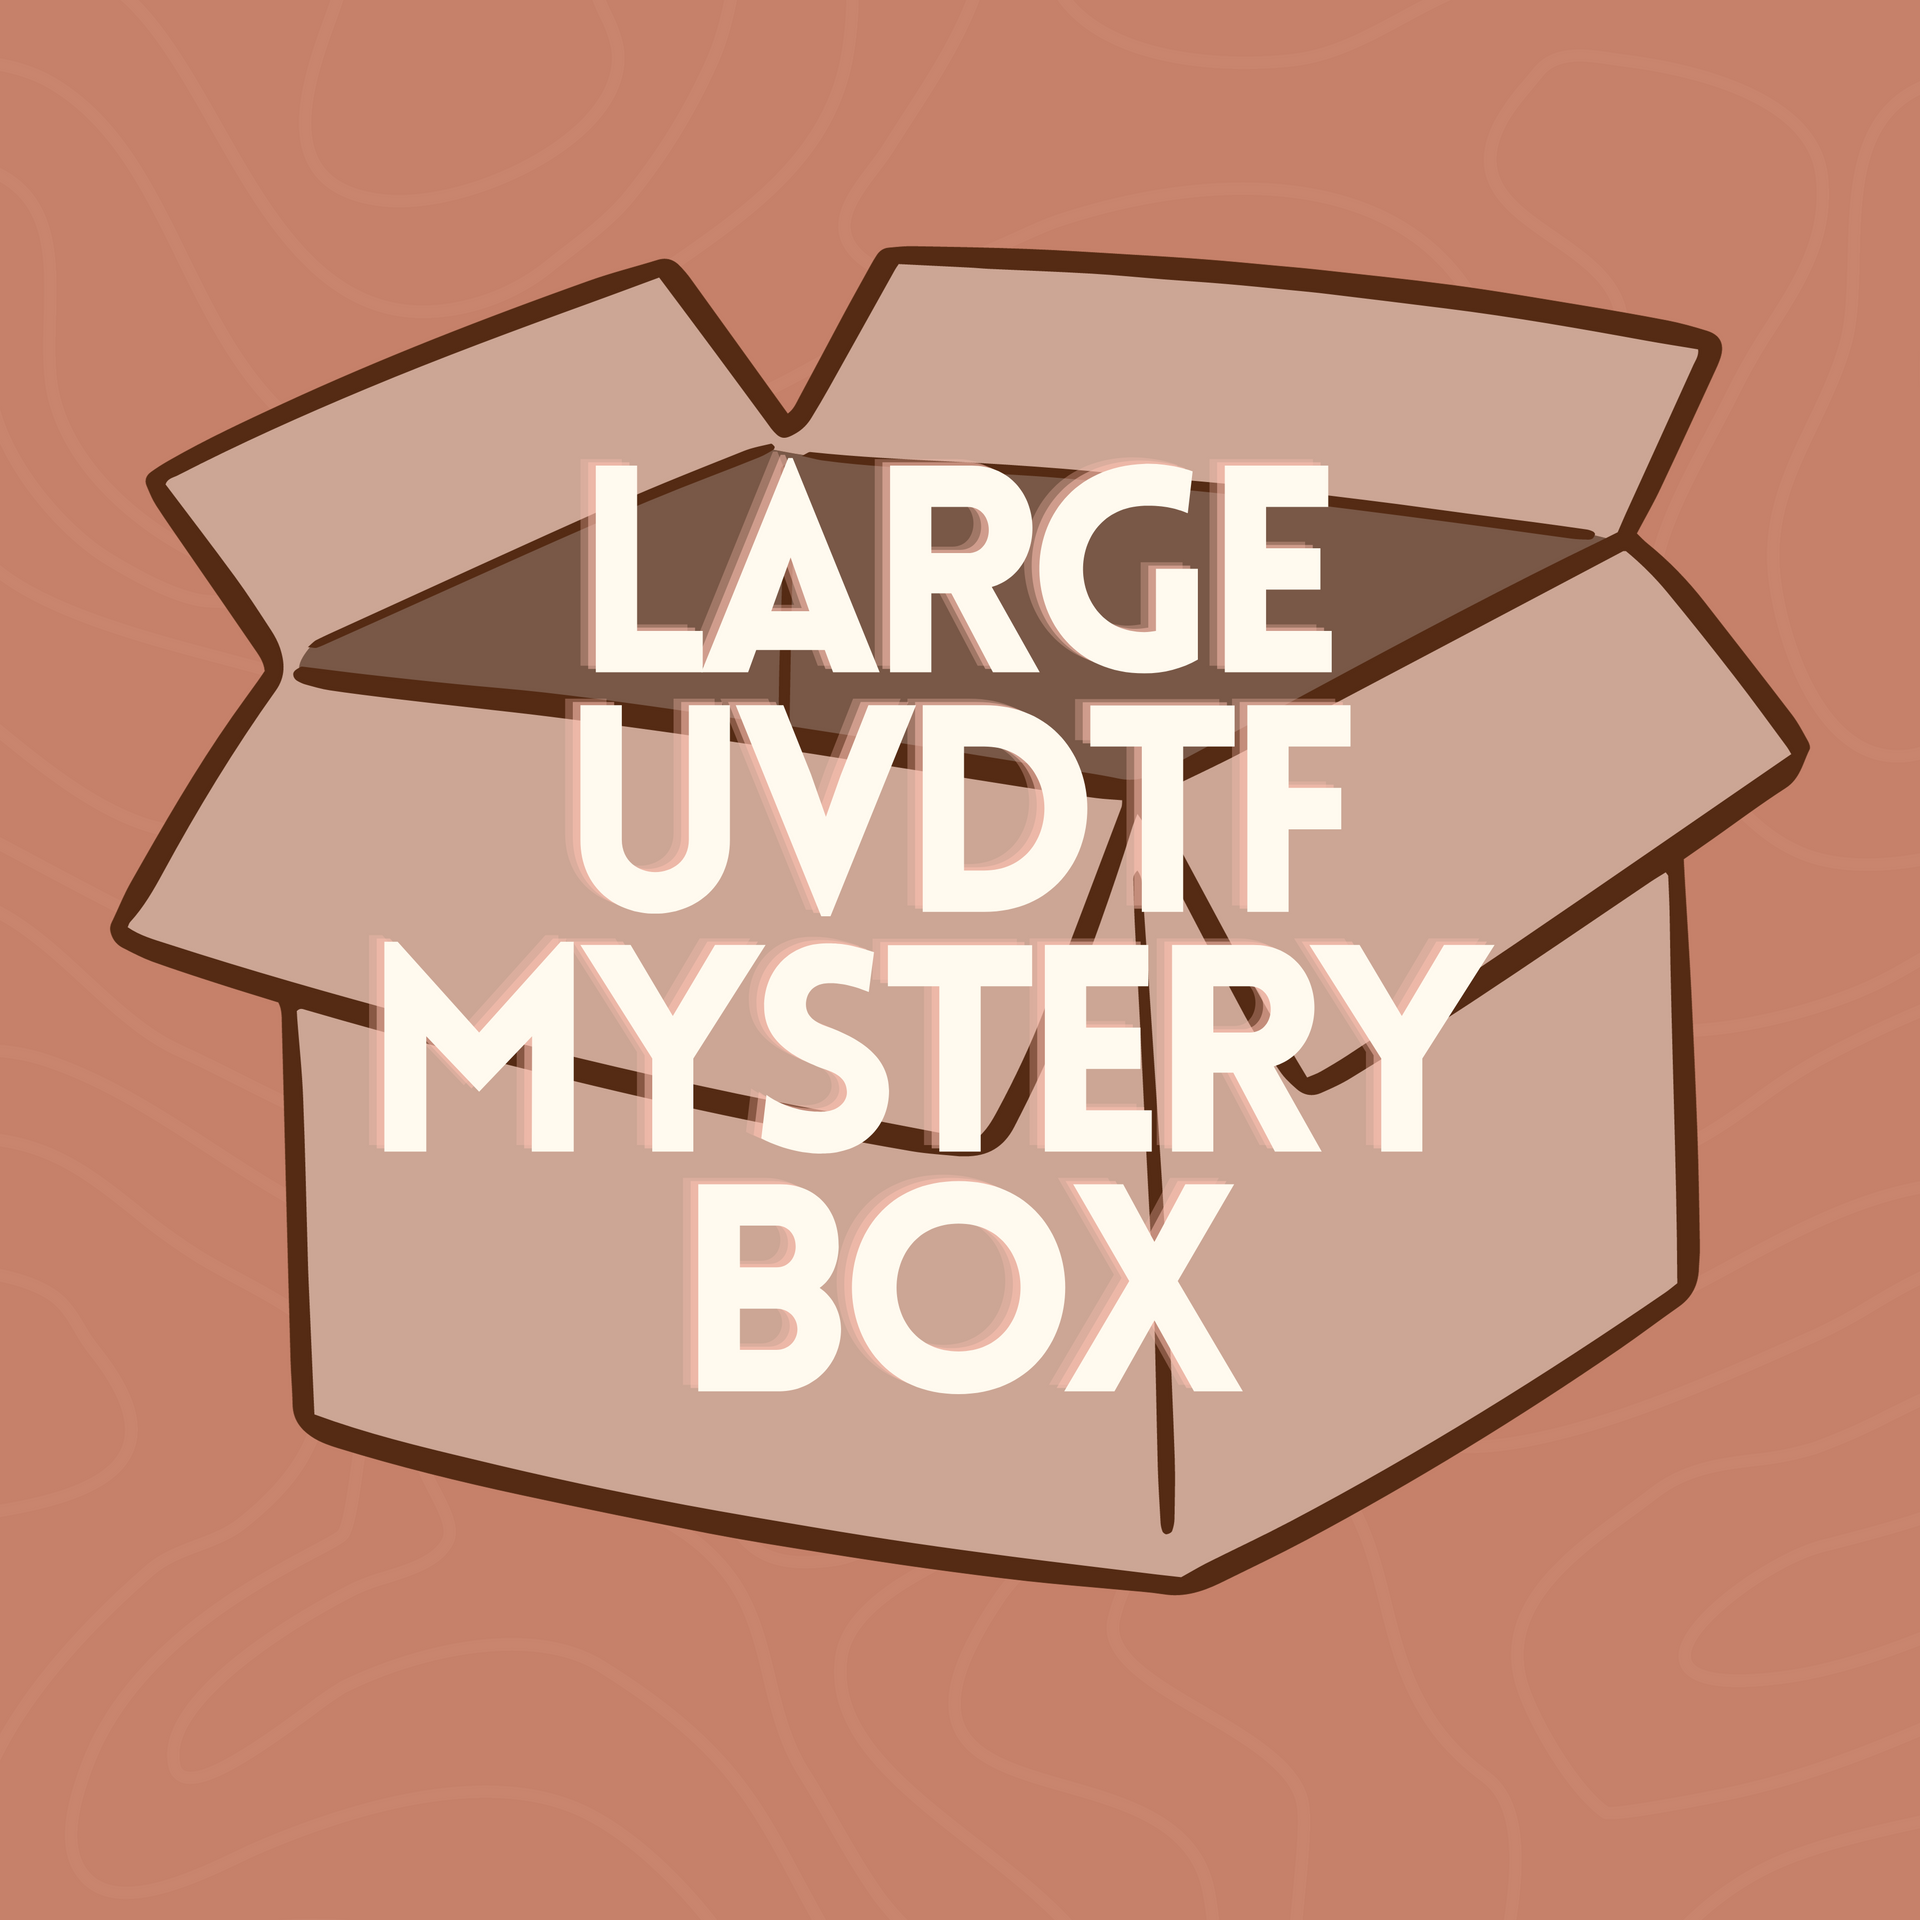 Buy wholesale Draw'n Drop Mystery Box